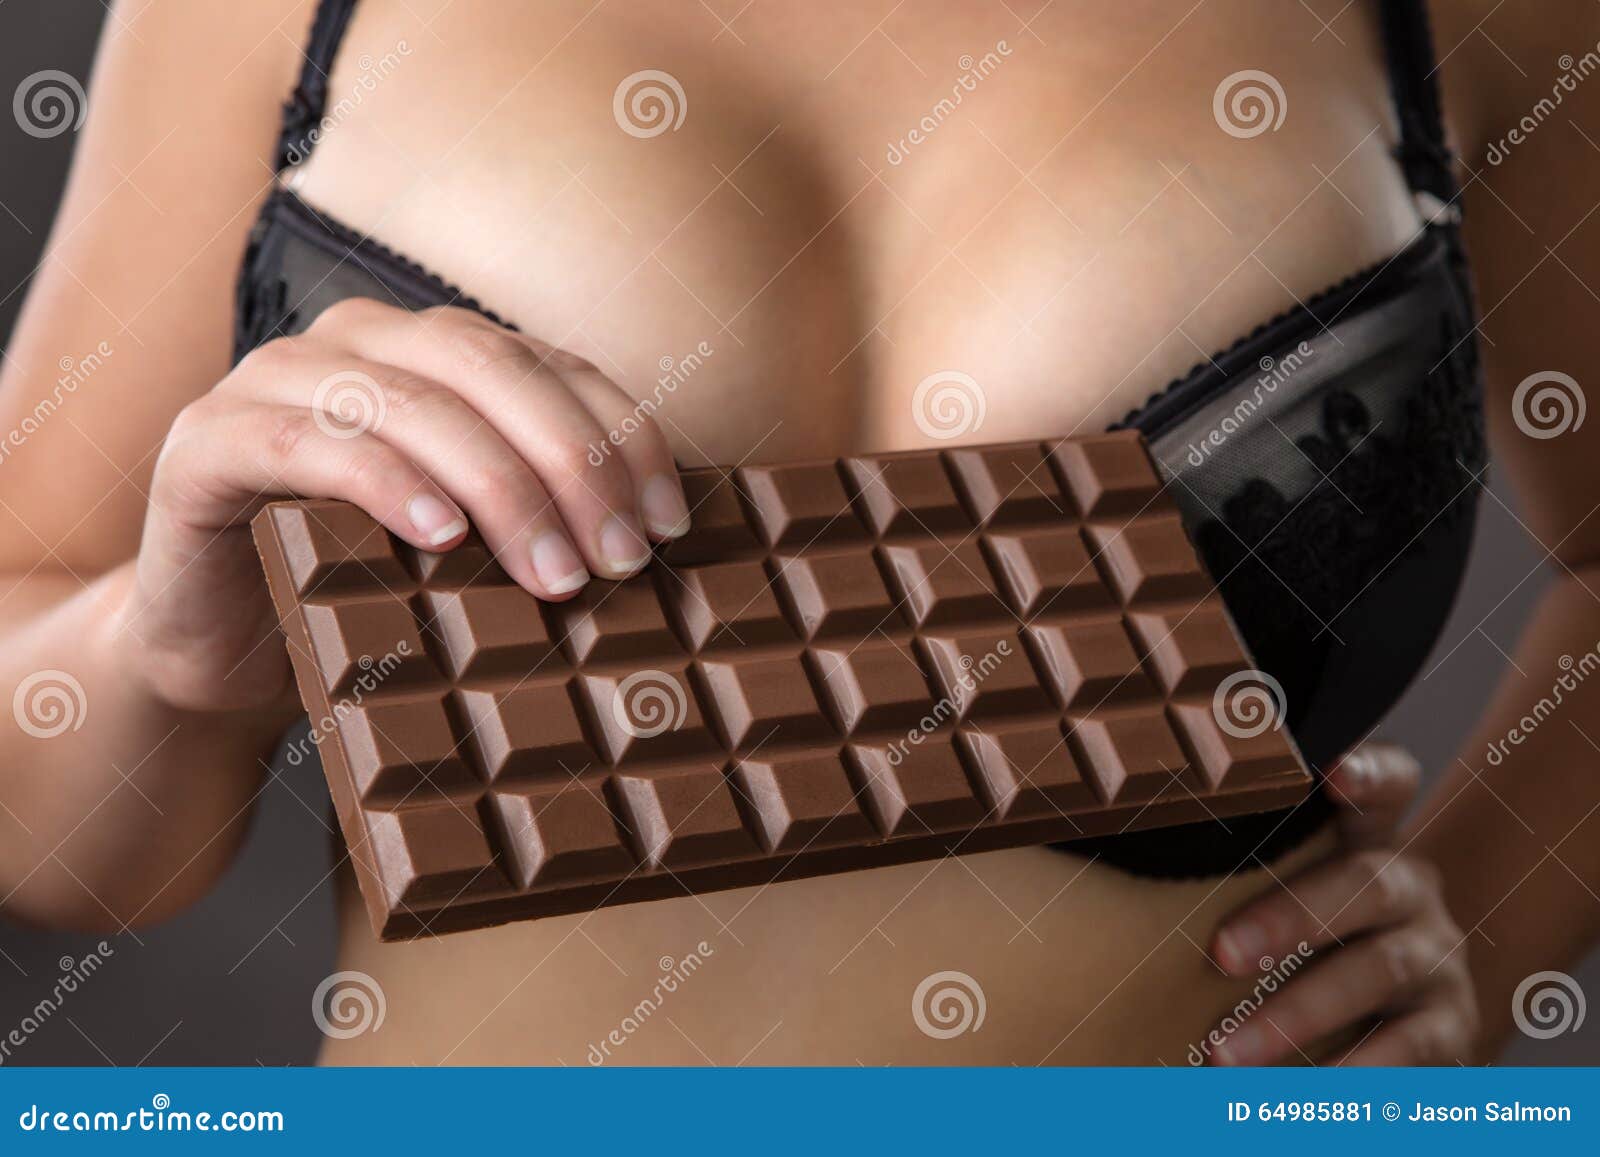 Chocolate Boobs.Com